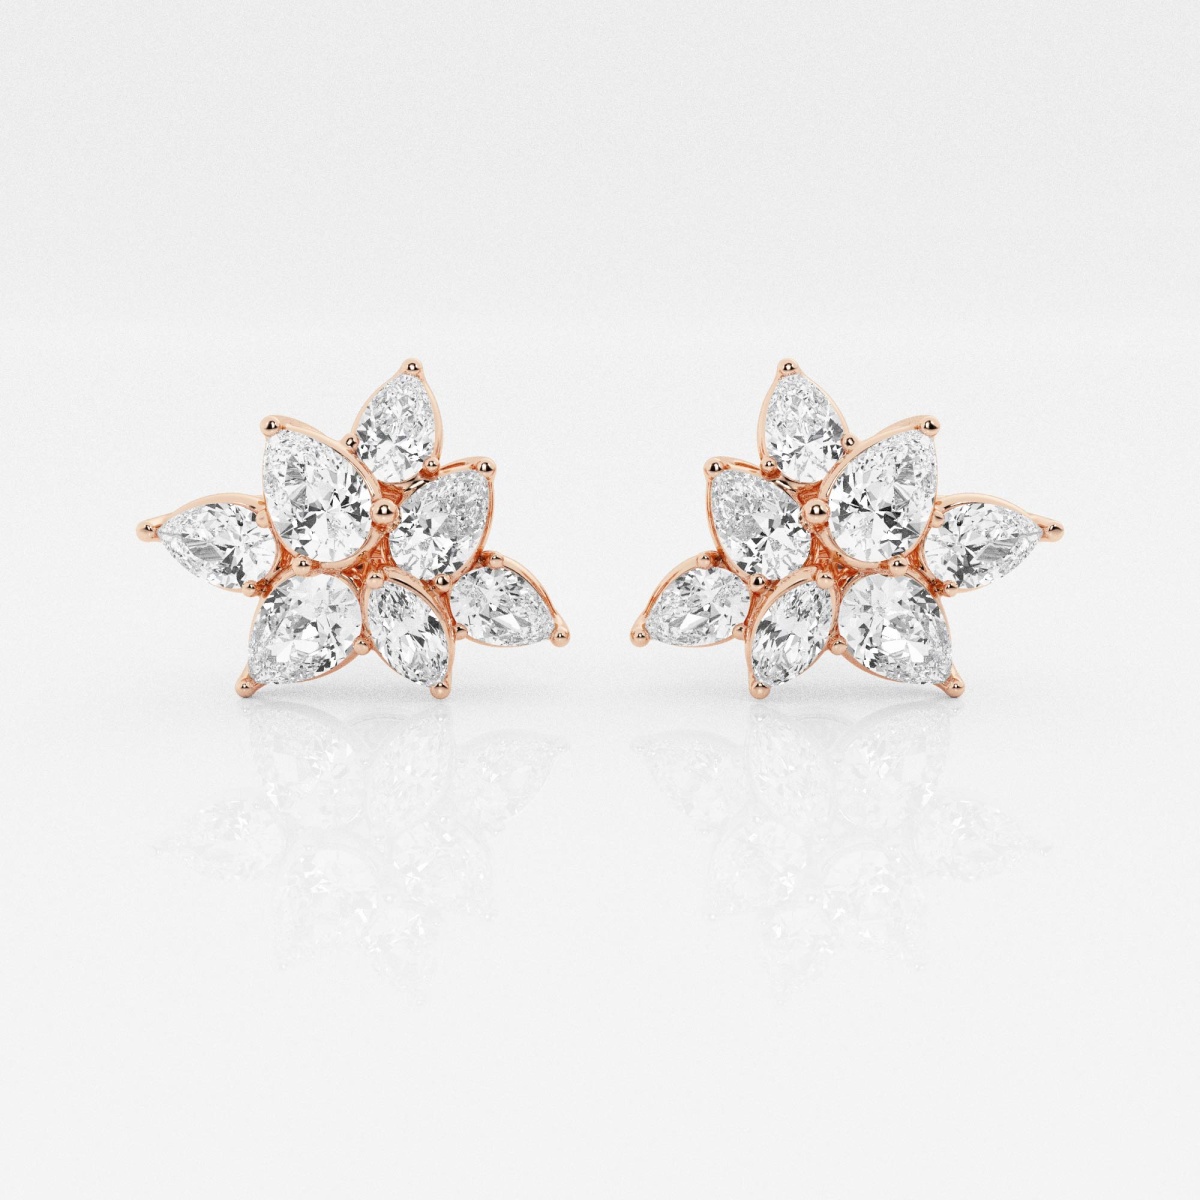 Badgley Mischka 2 1/2 ctw Pear & Marquise Lab Grown Diamond Cluster Fashion Stud Earring